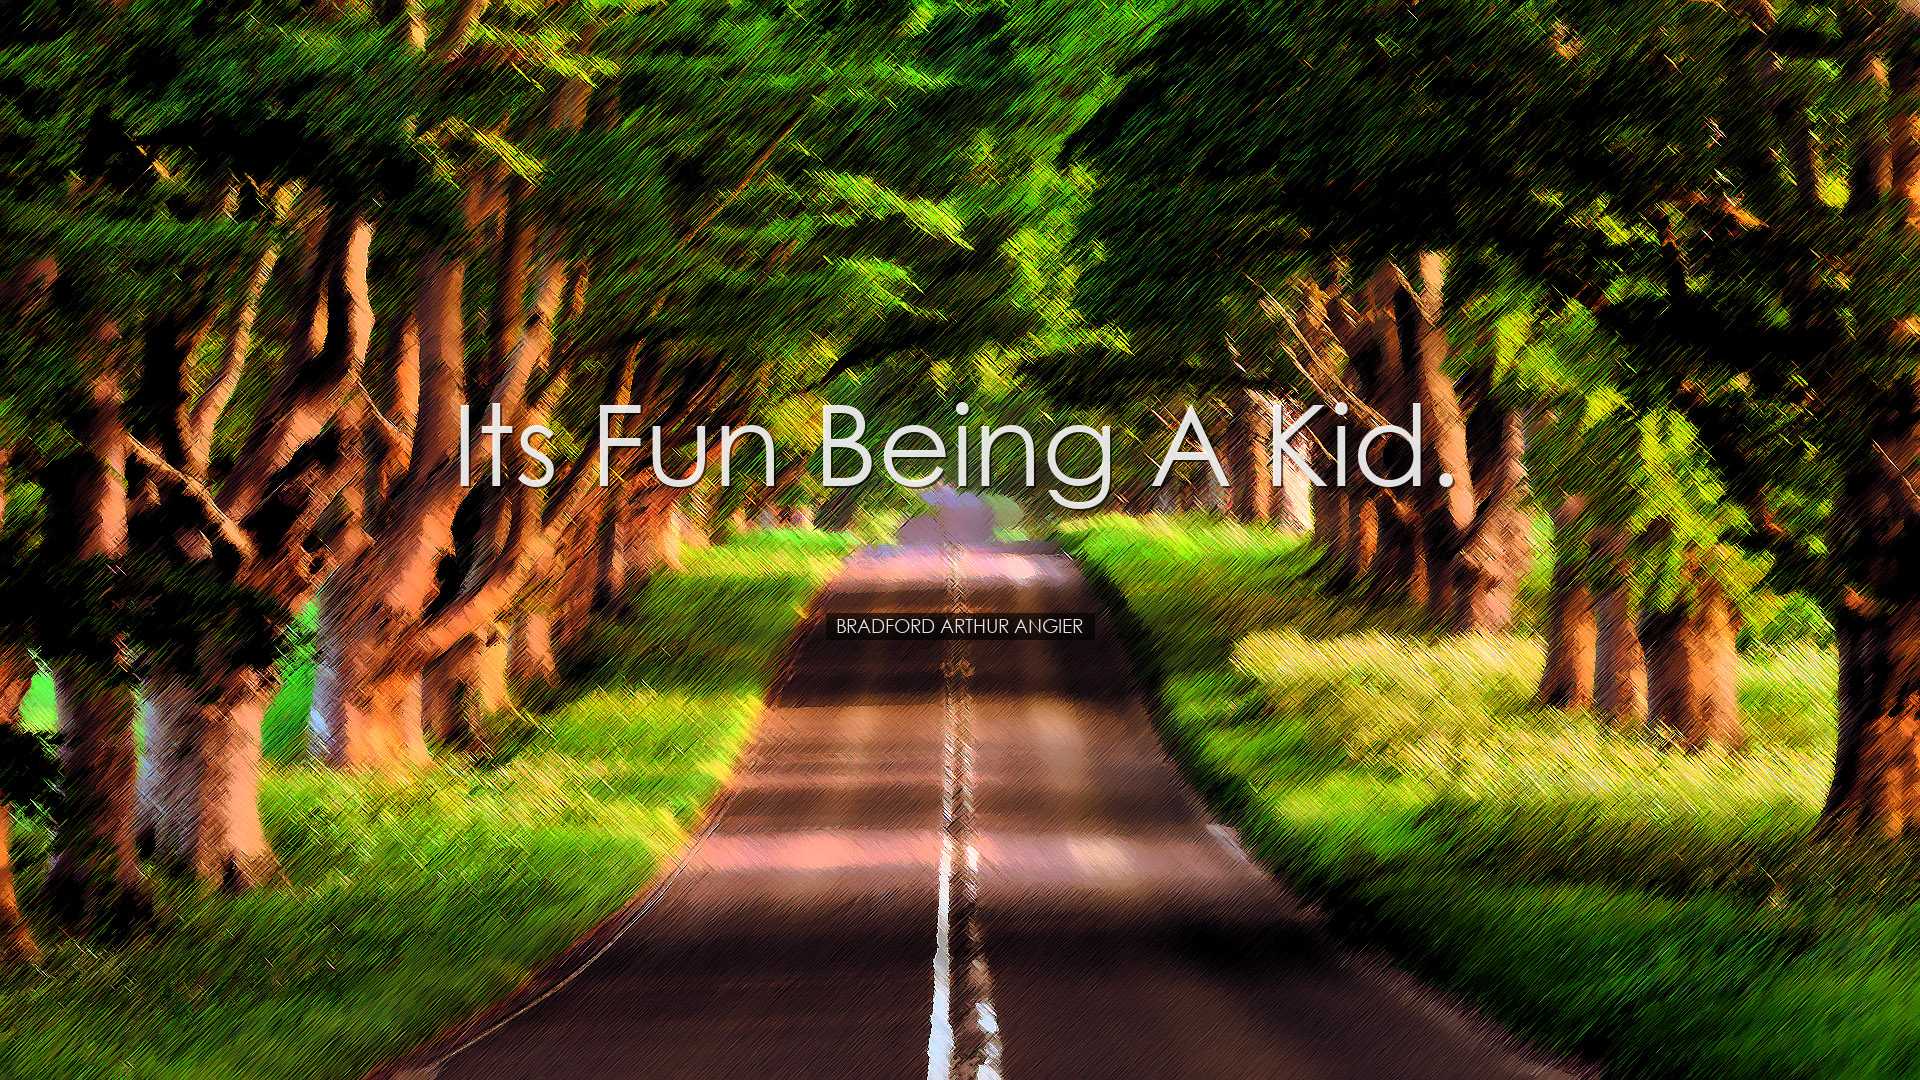 Its fun being a kid. - Bradford Arthur Angier